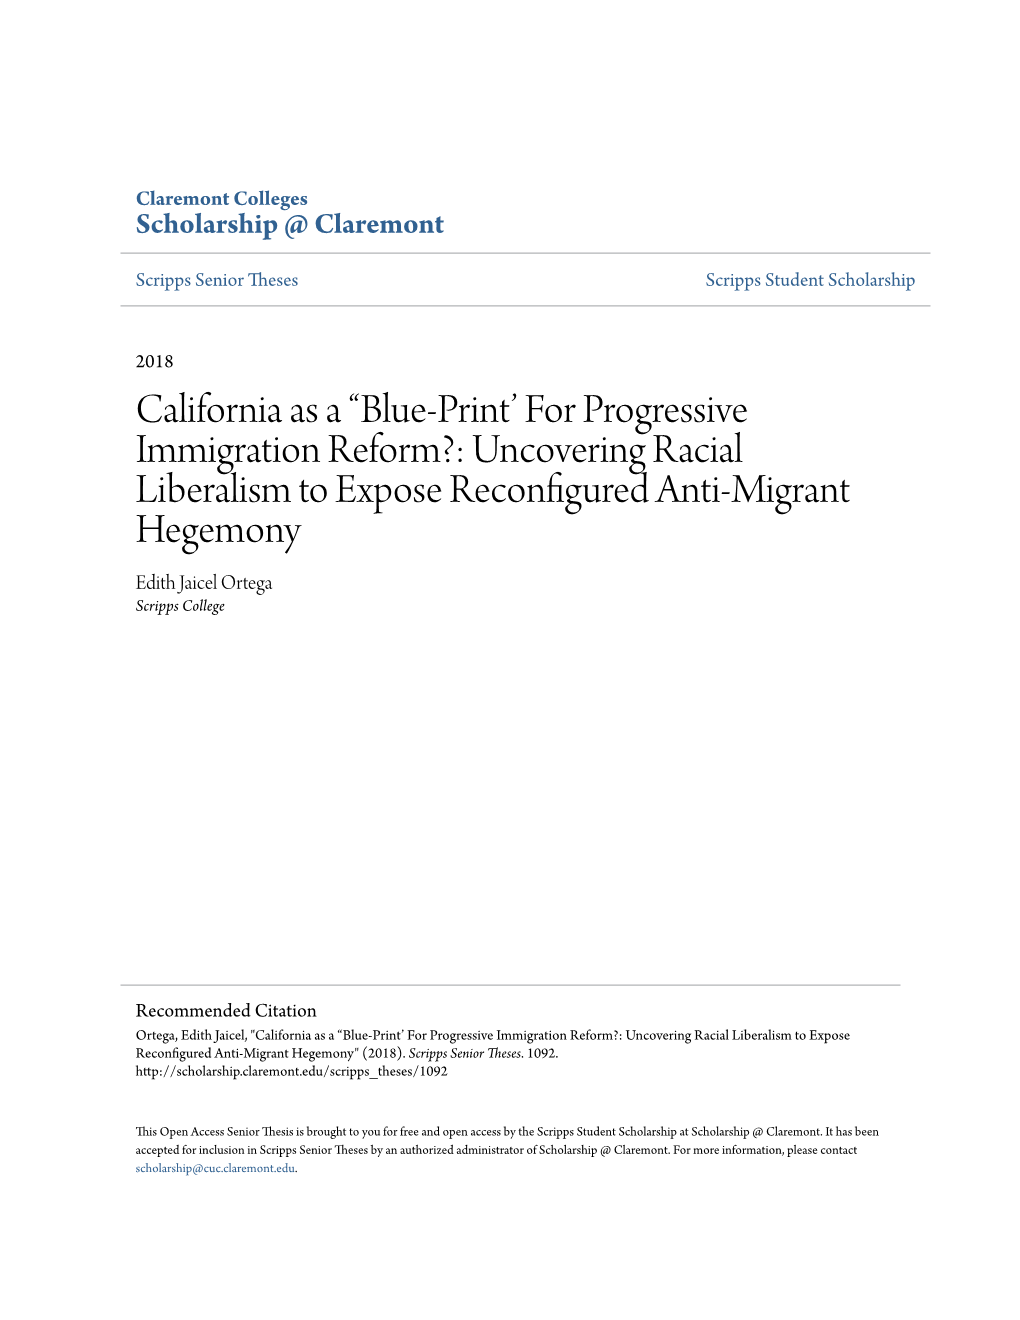 California As a “Blue-Print' for Progressive Immigration Reform